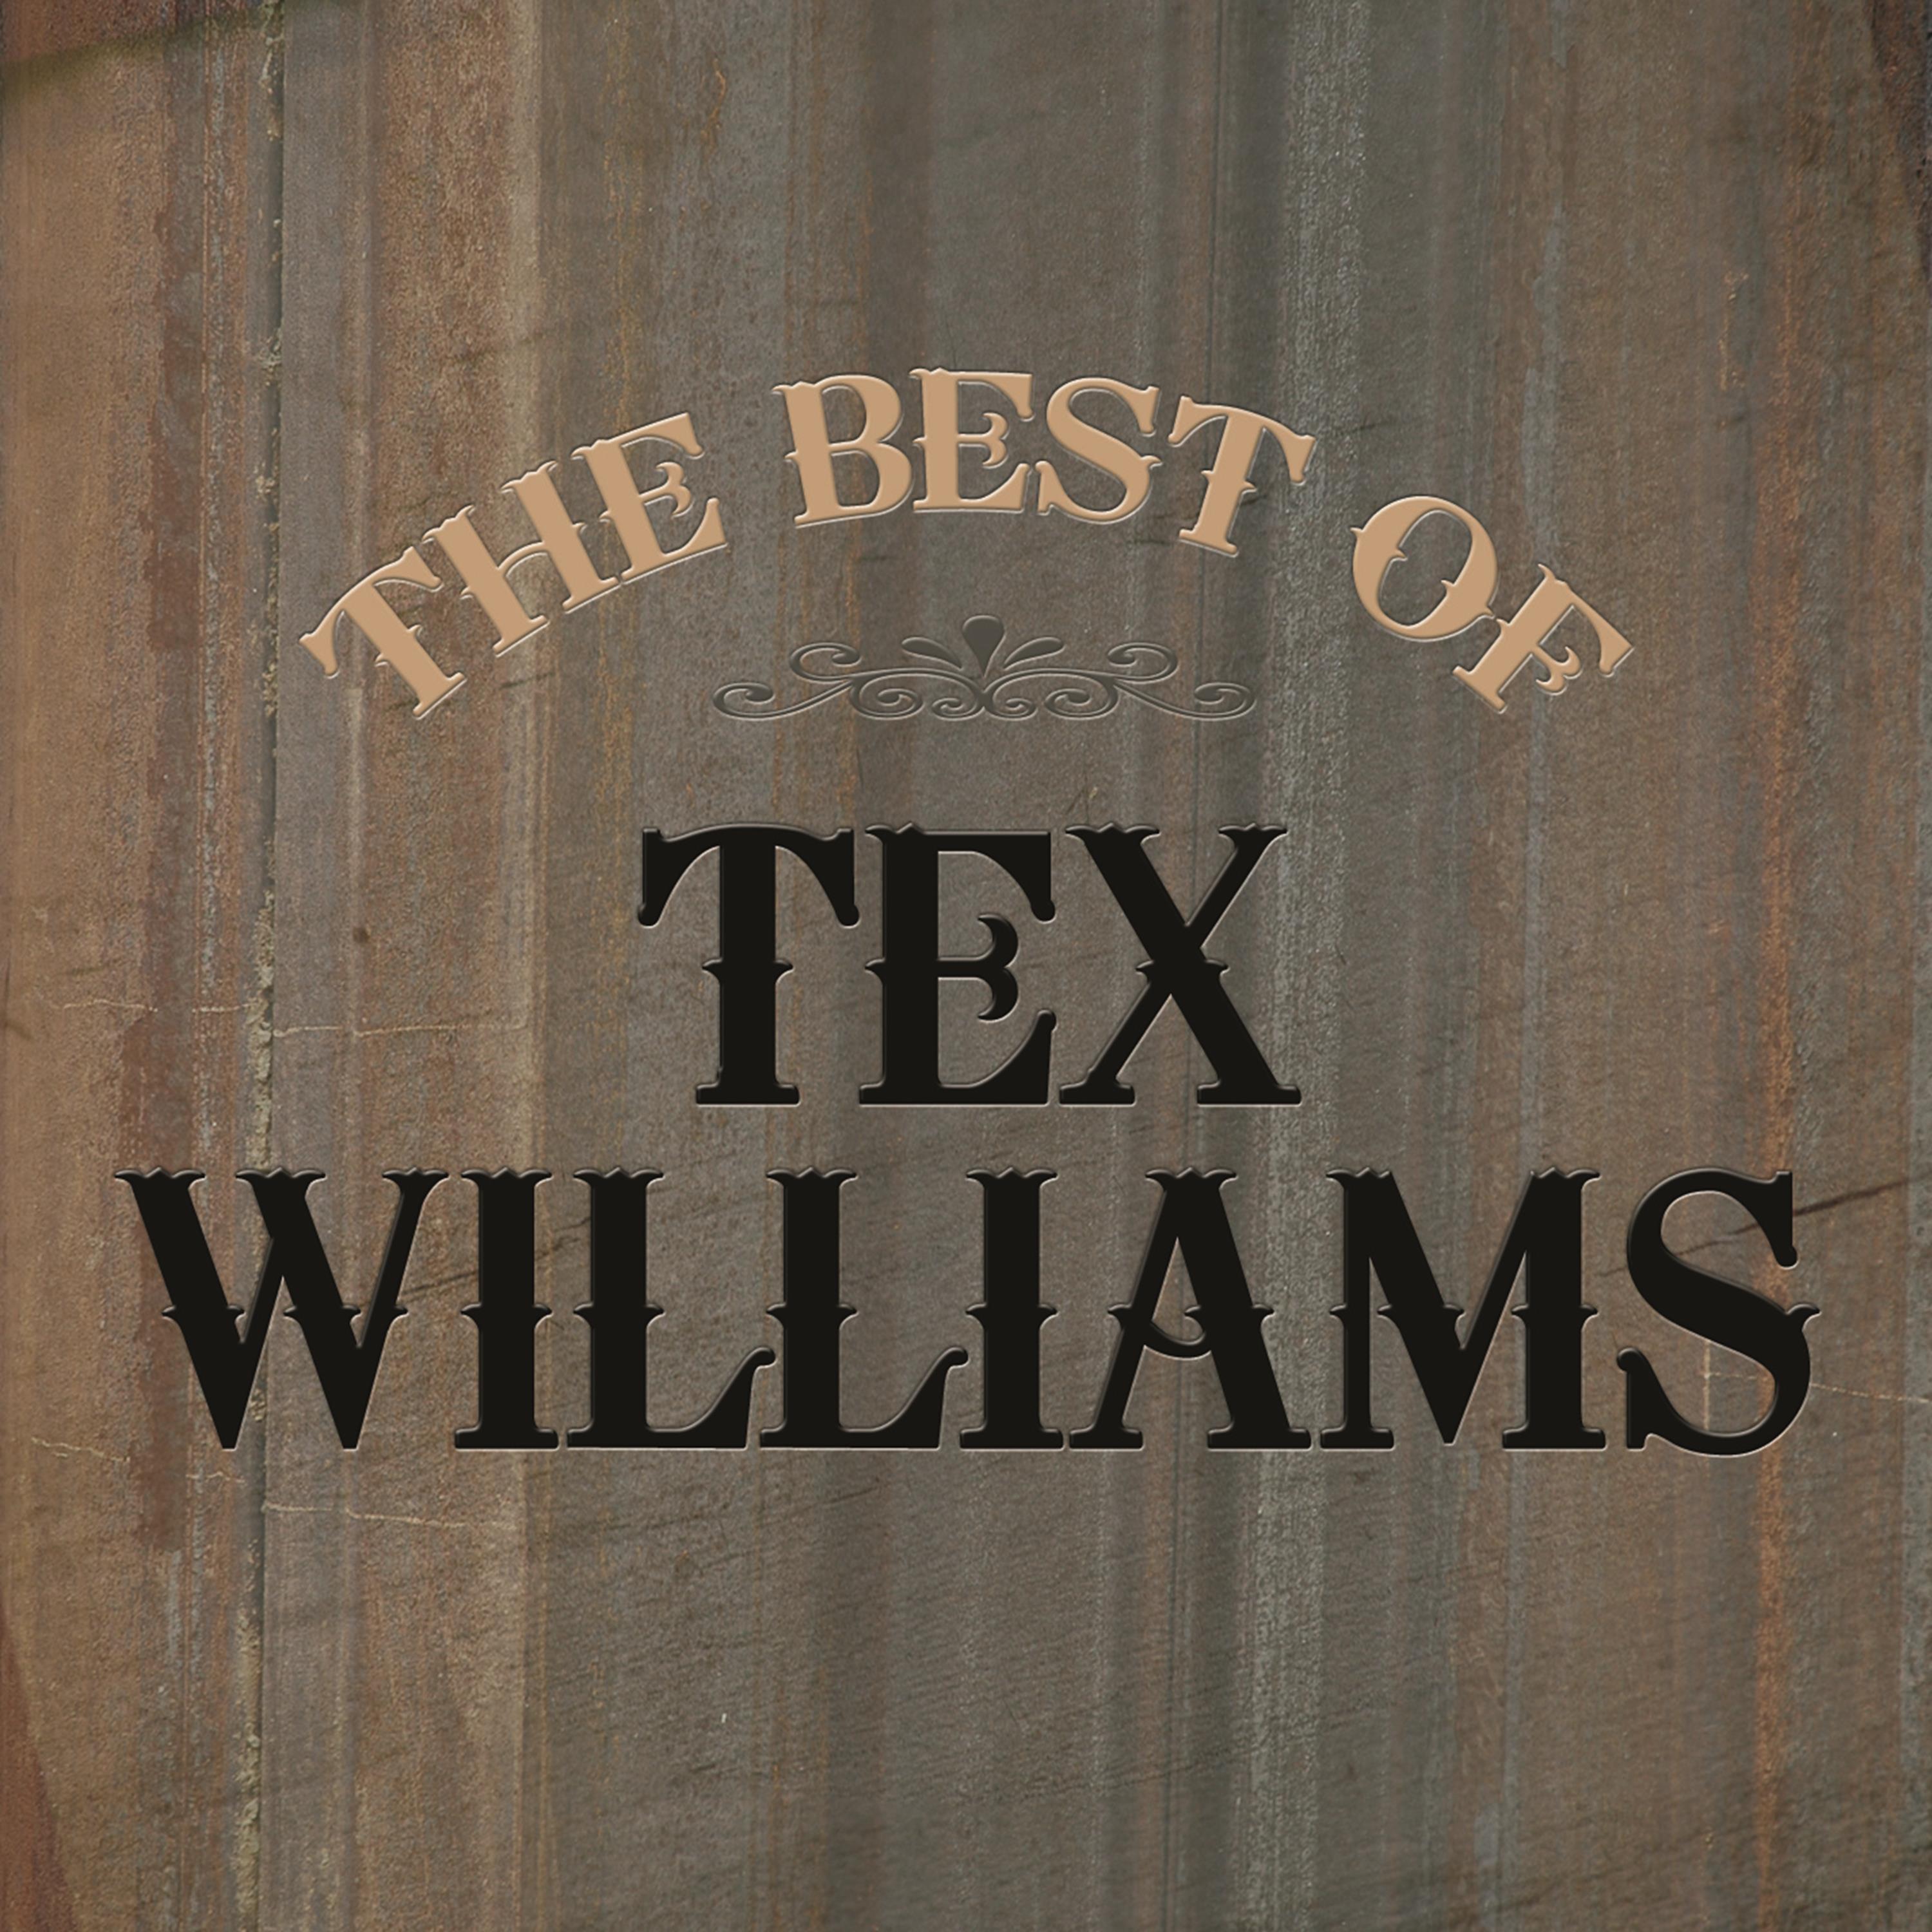 The Best of Tex Williams